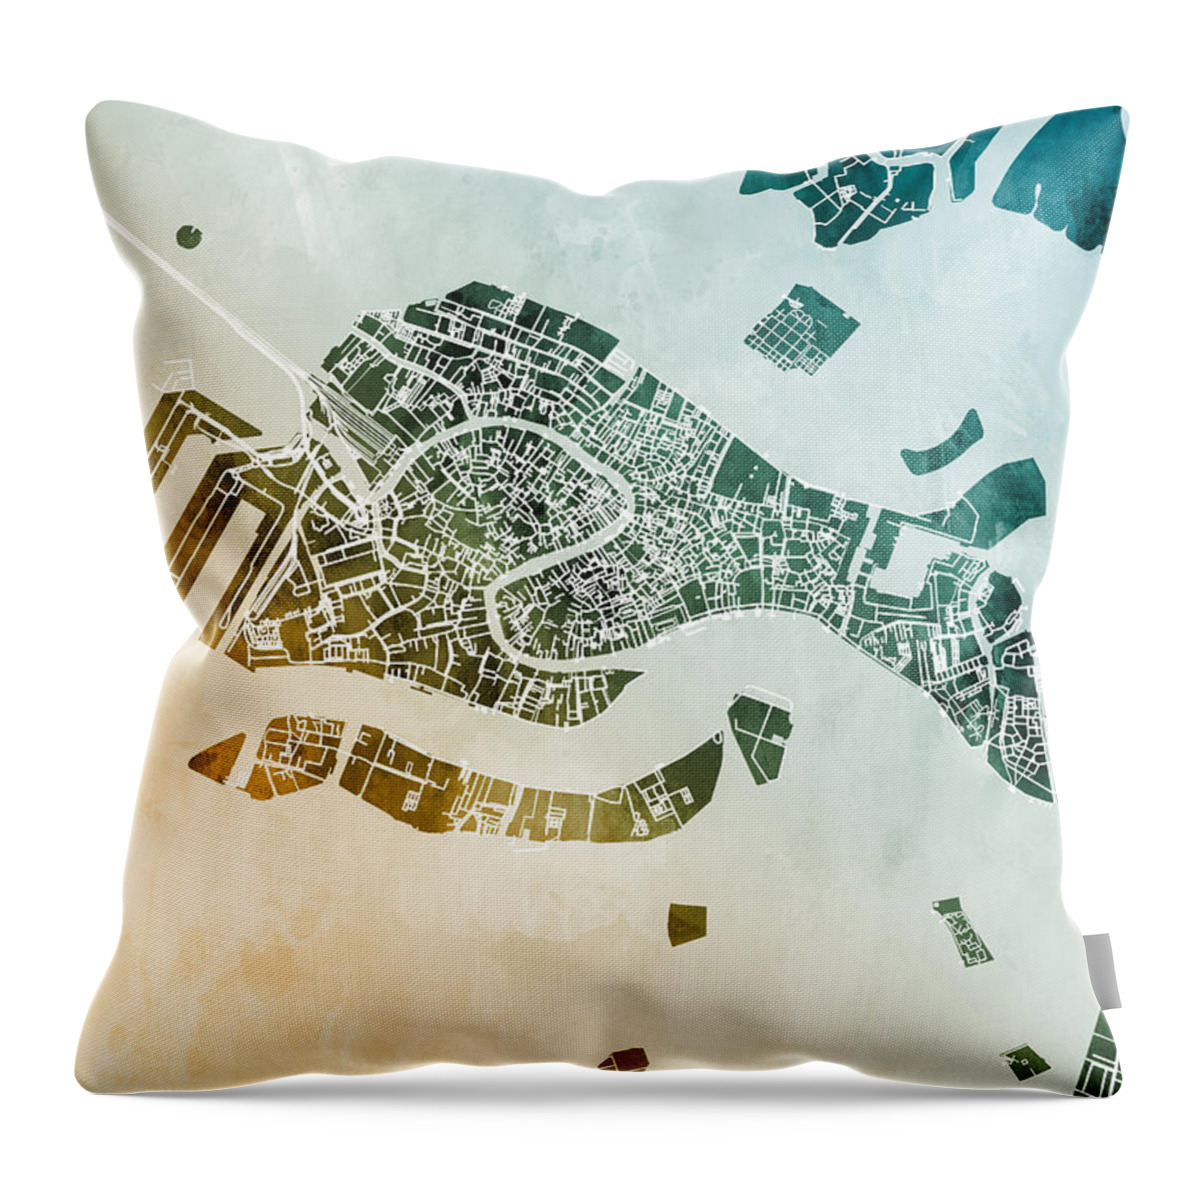 Venice Throw Pillow featuring the digital art Venice Italy City Map by Michael Tompsett